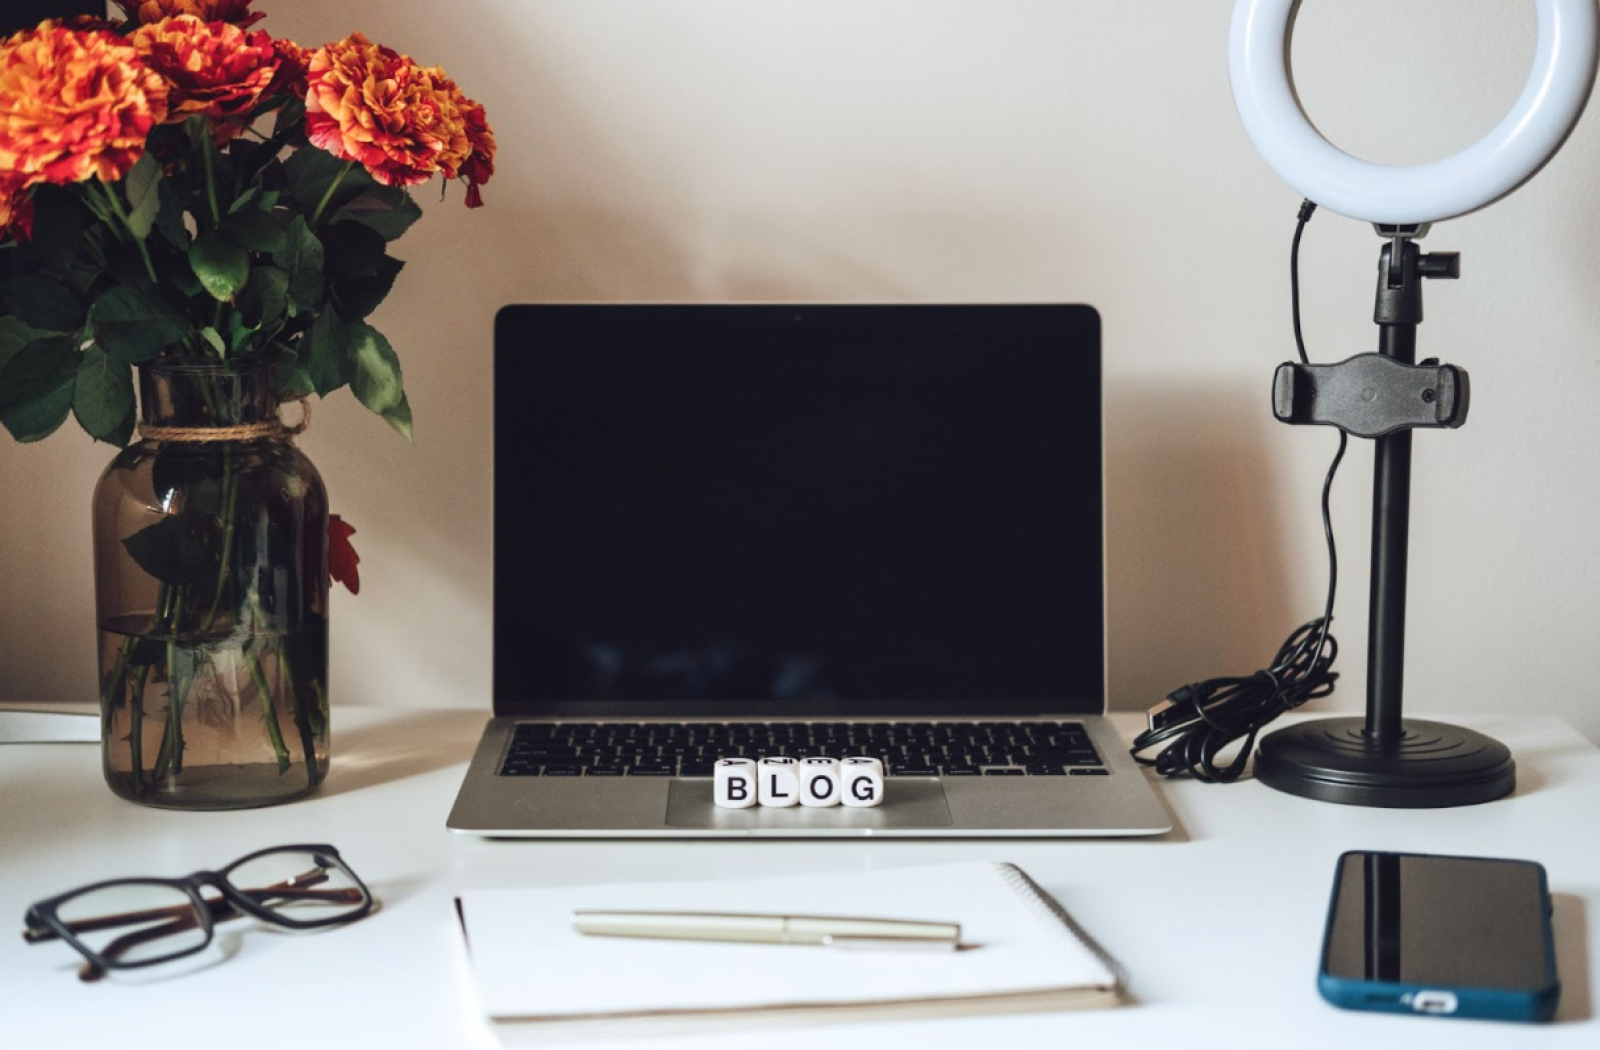 Blank laptop set up on a desk ready for blogging